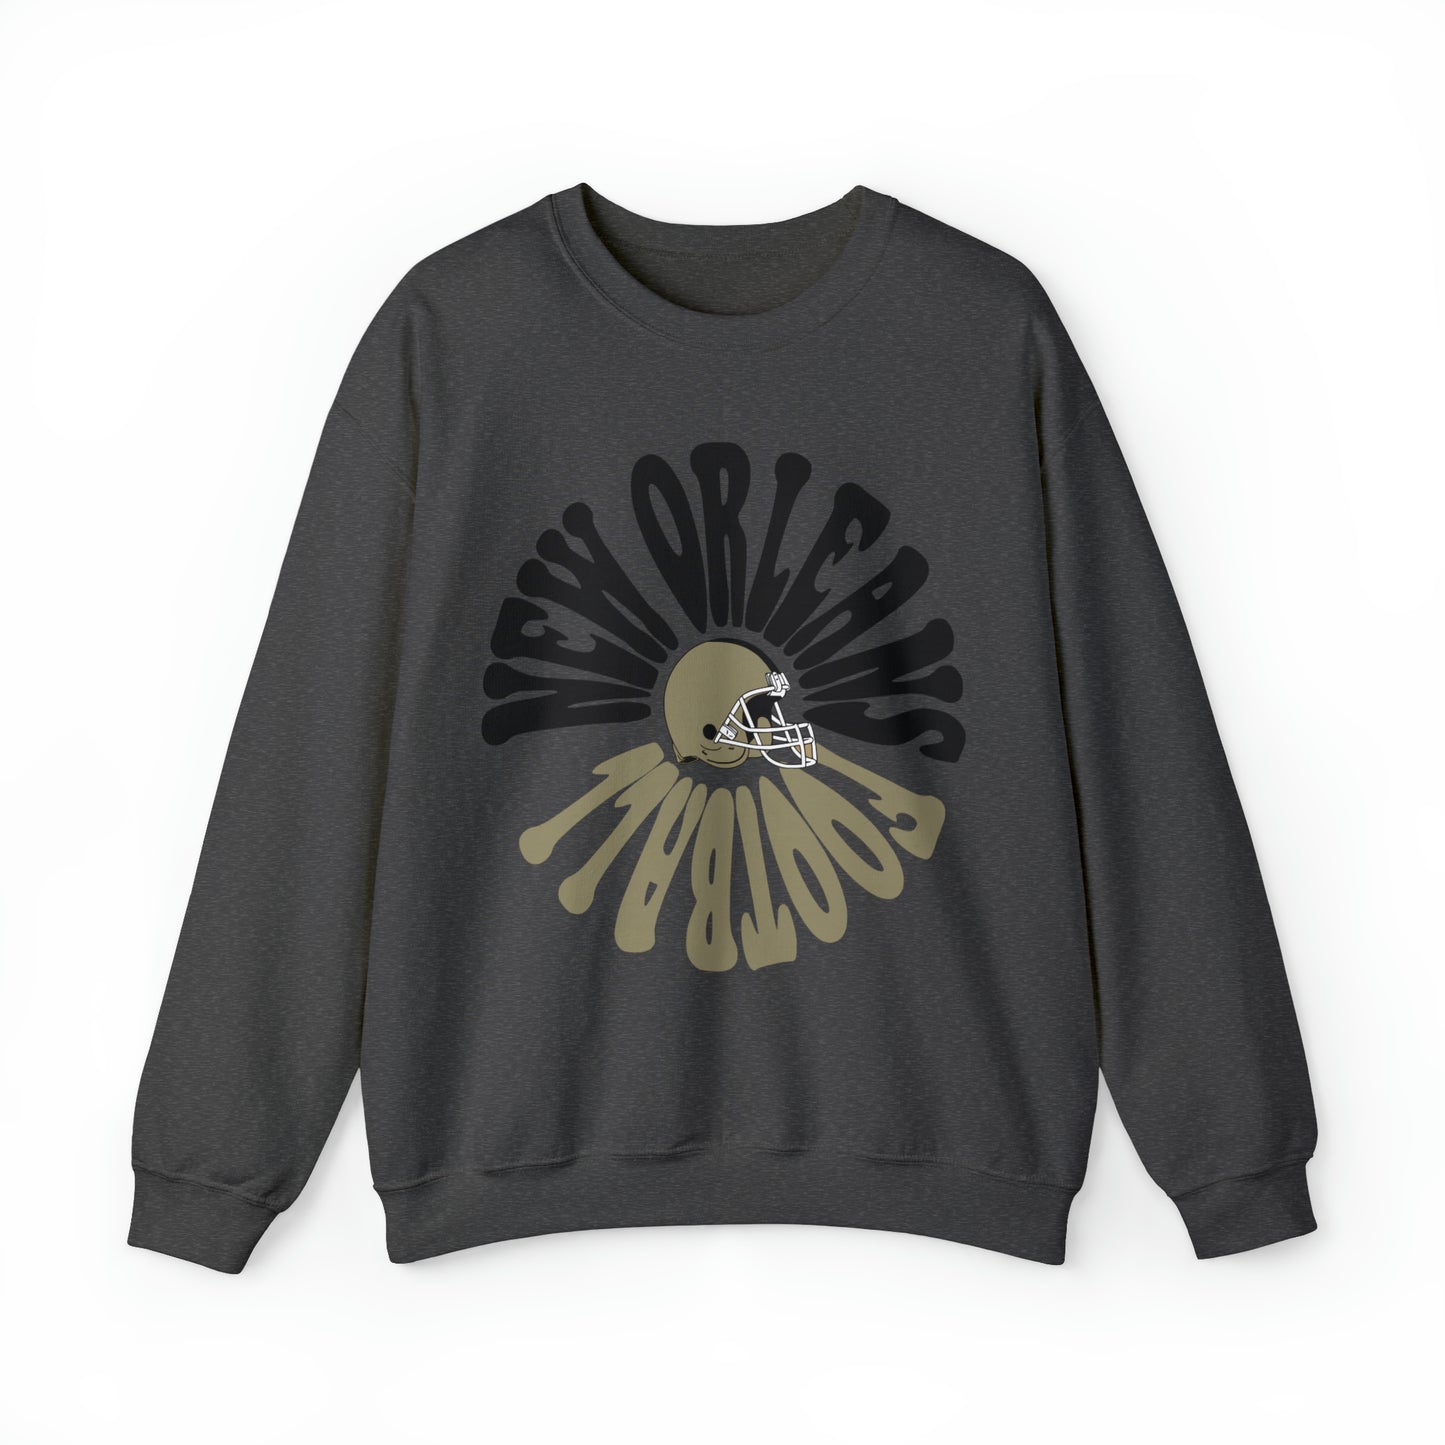 Retro New Orleans Saints Crewneck - Vintage Style Louisiana Football Sweatshirt - Men's, Women's - Design 2